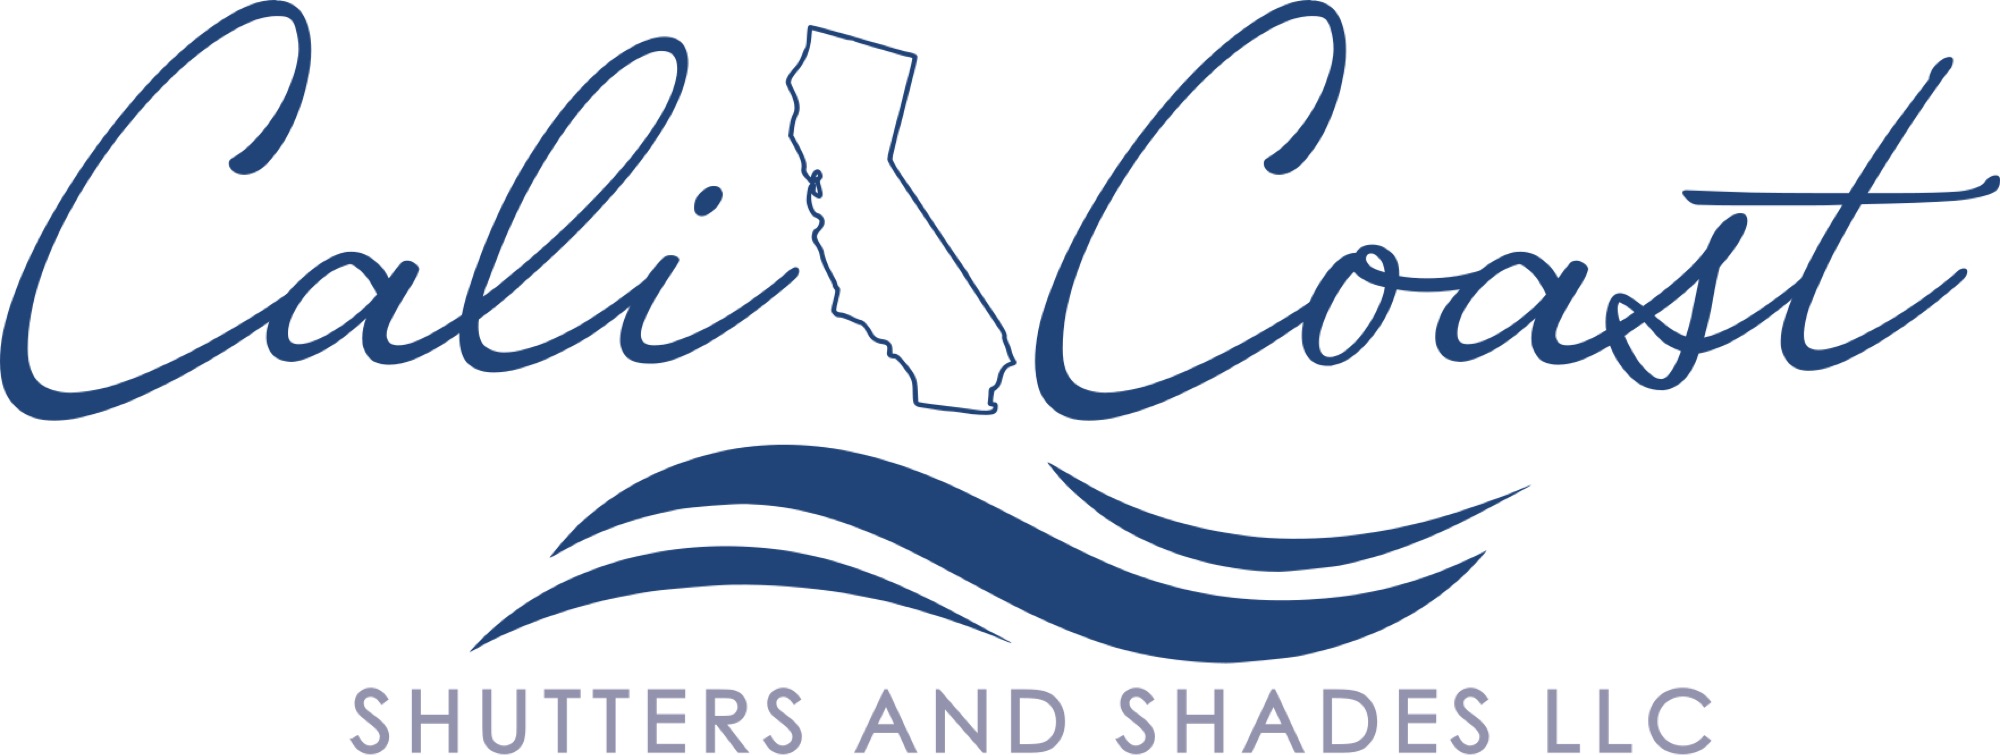 Cali Coast Shutters & Shades, LLC Logo